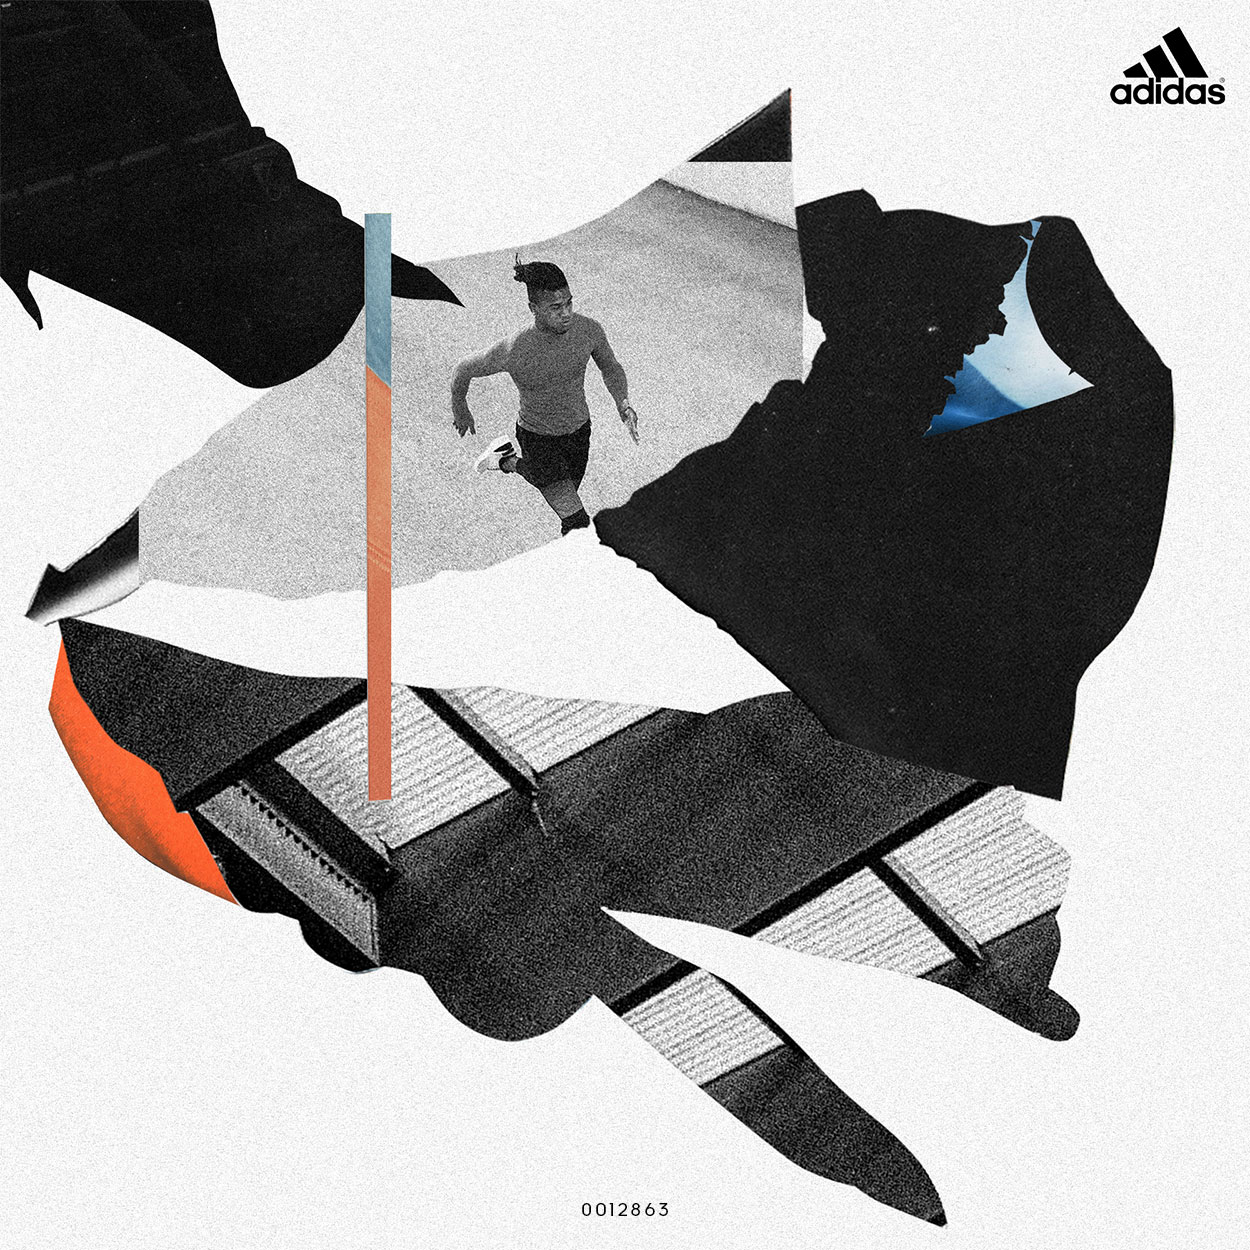 AdidasFootball_Concept_04_Design_01_FlorianStumpe